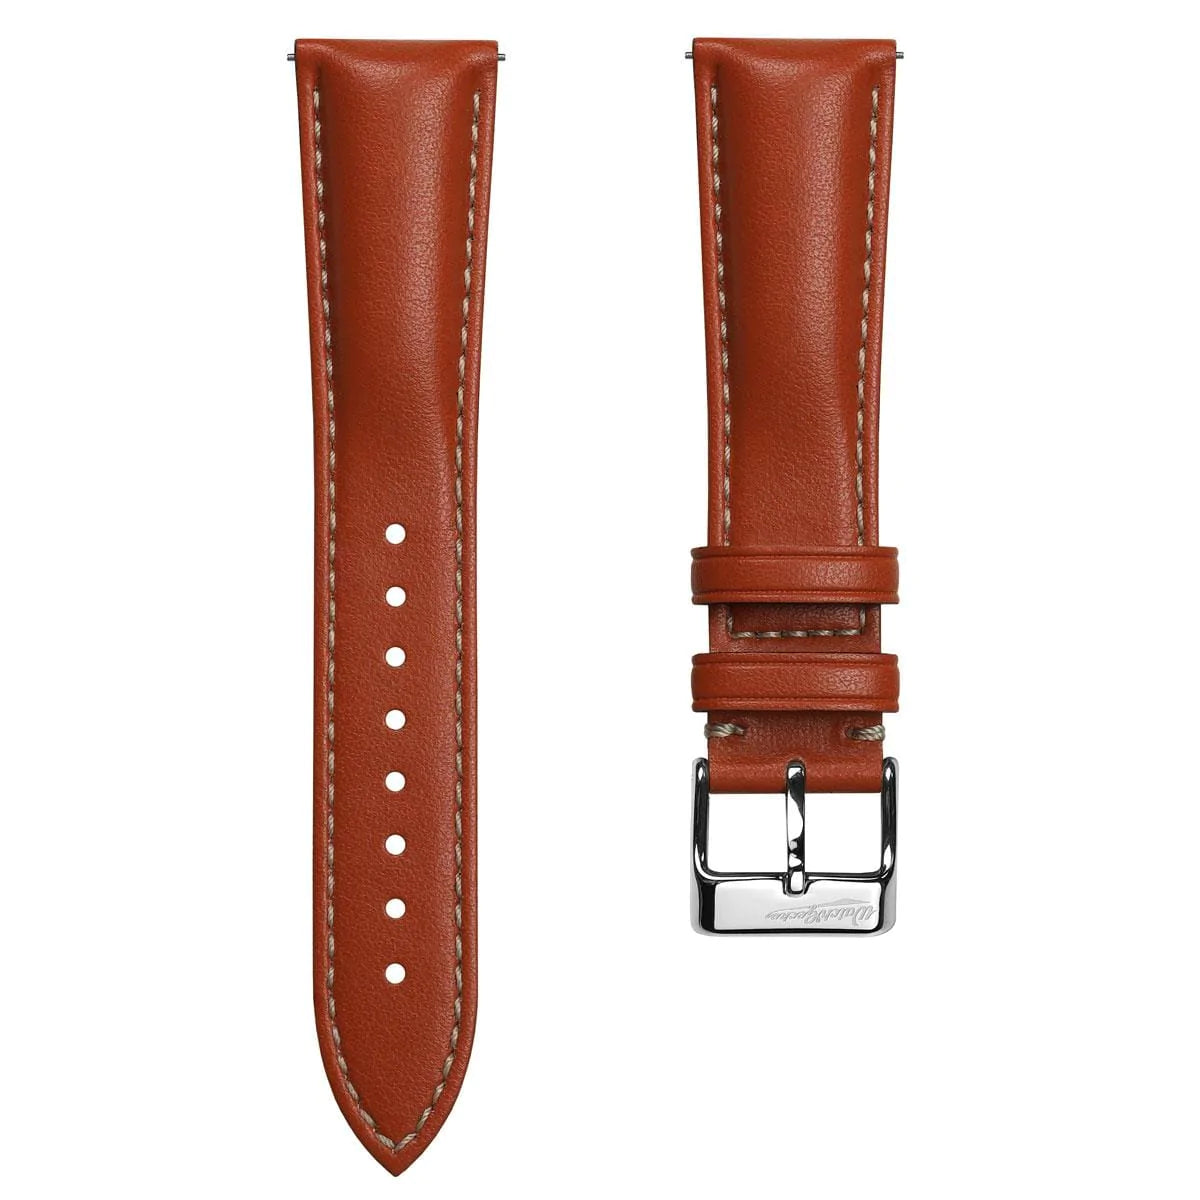 Vintage Highley Italian Vegan Leather Watch Strap - Red Birch